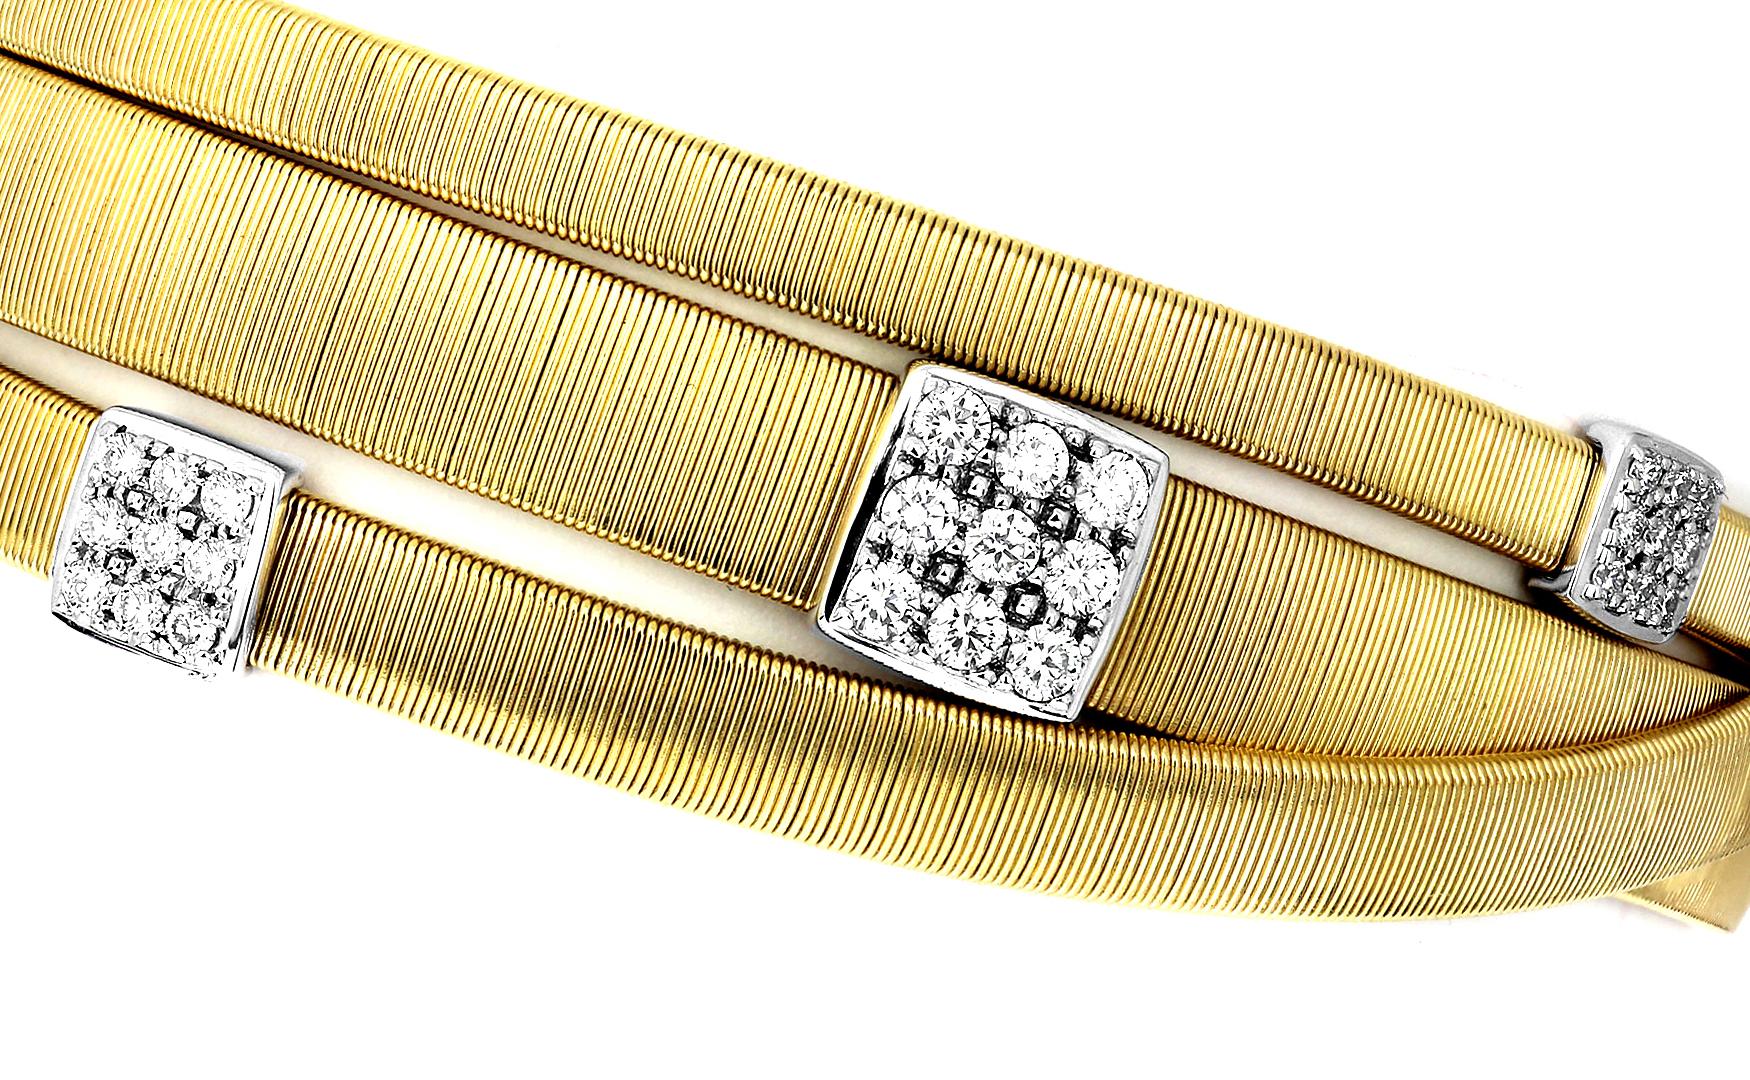 marco bicego masai bracelet